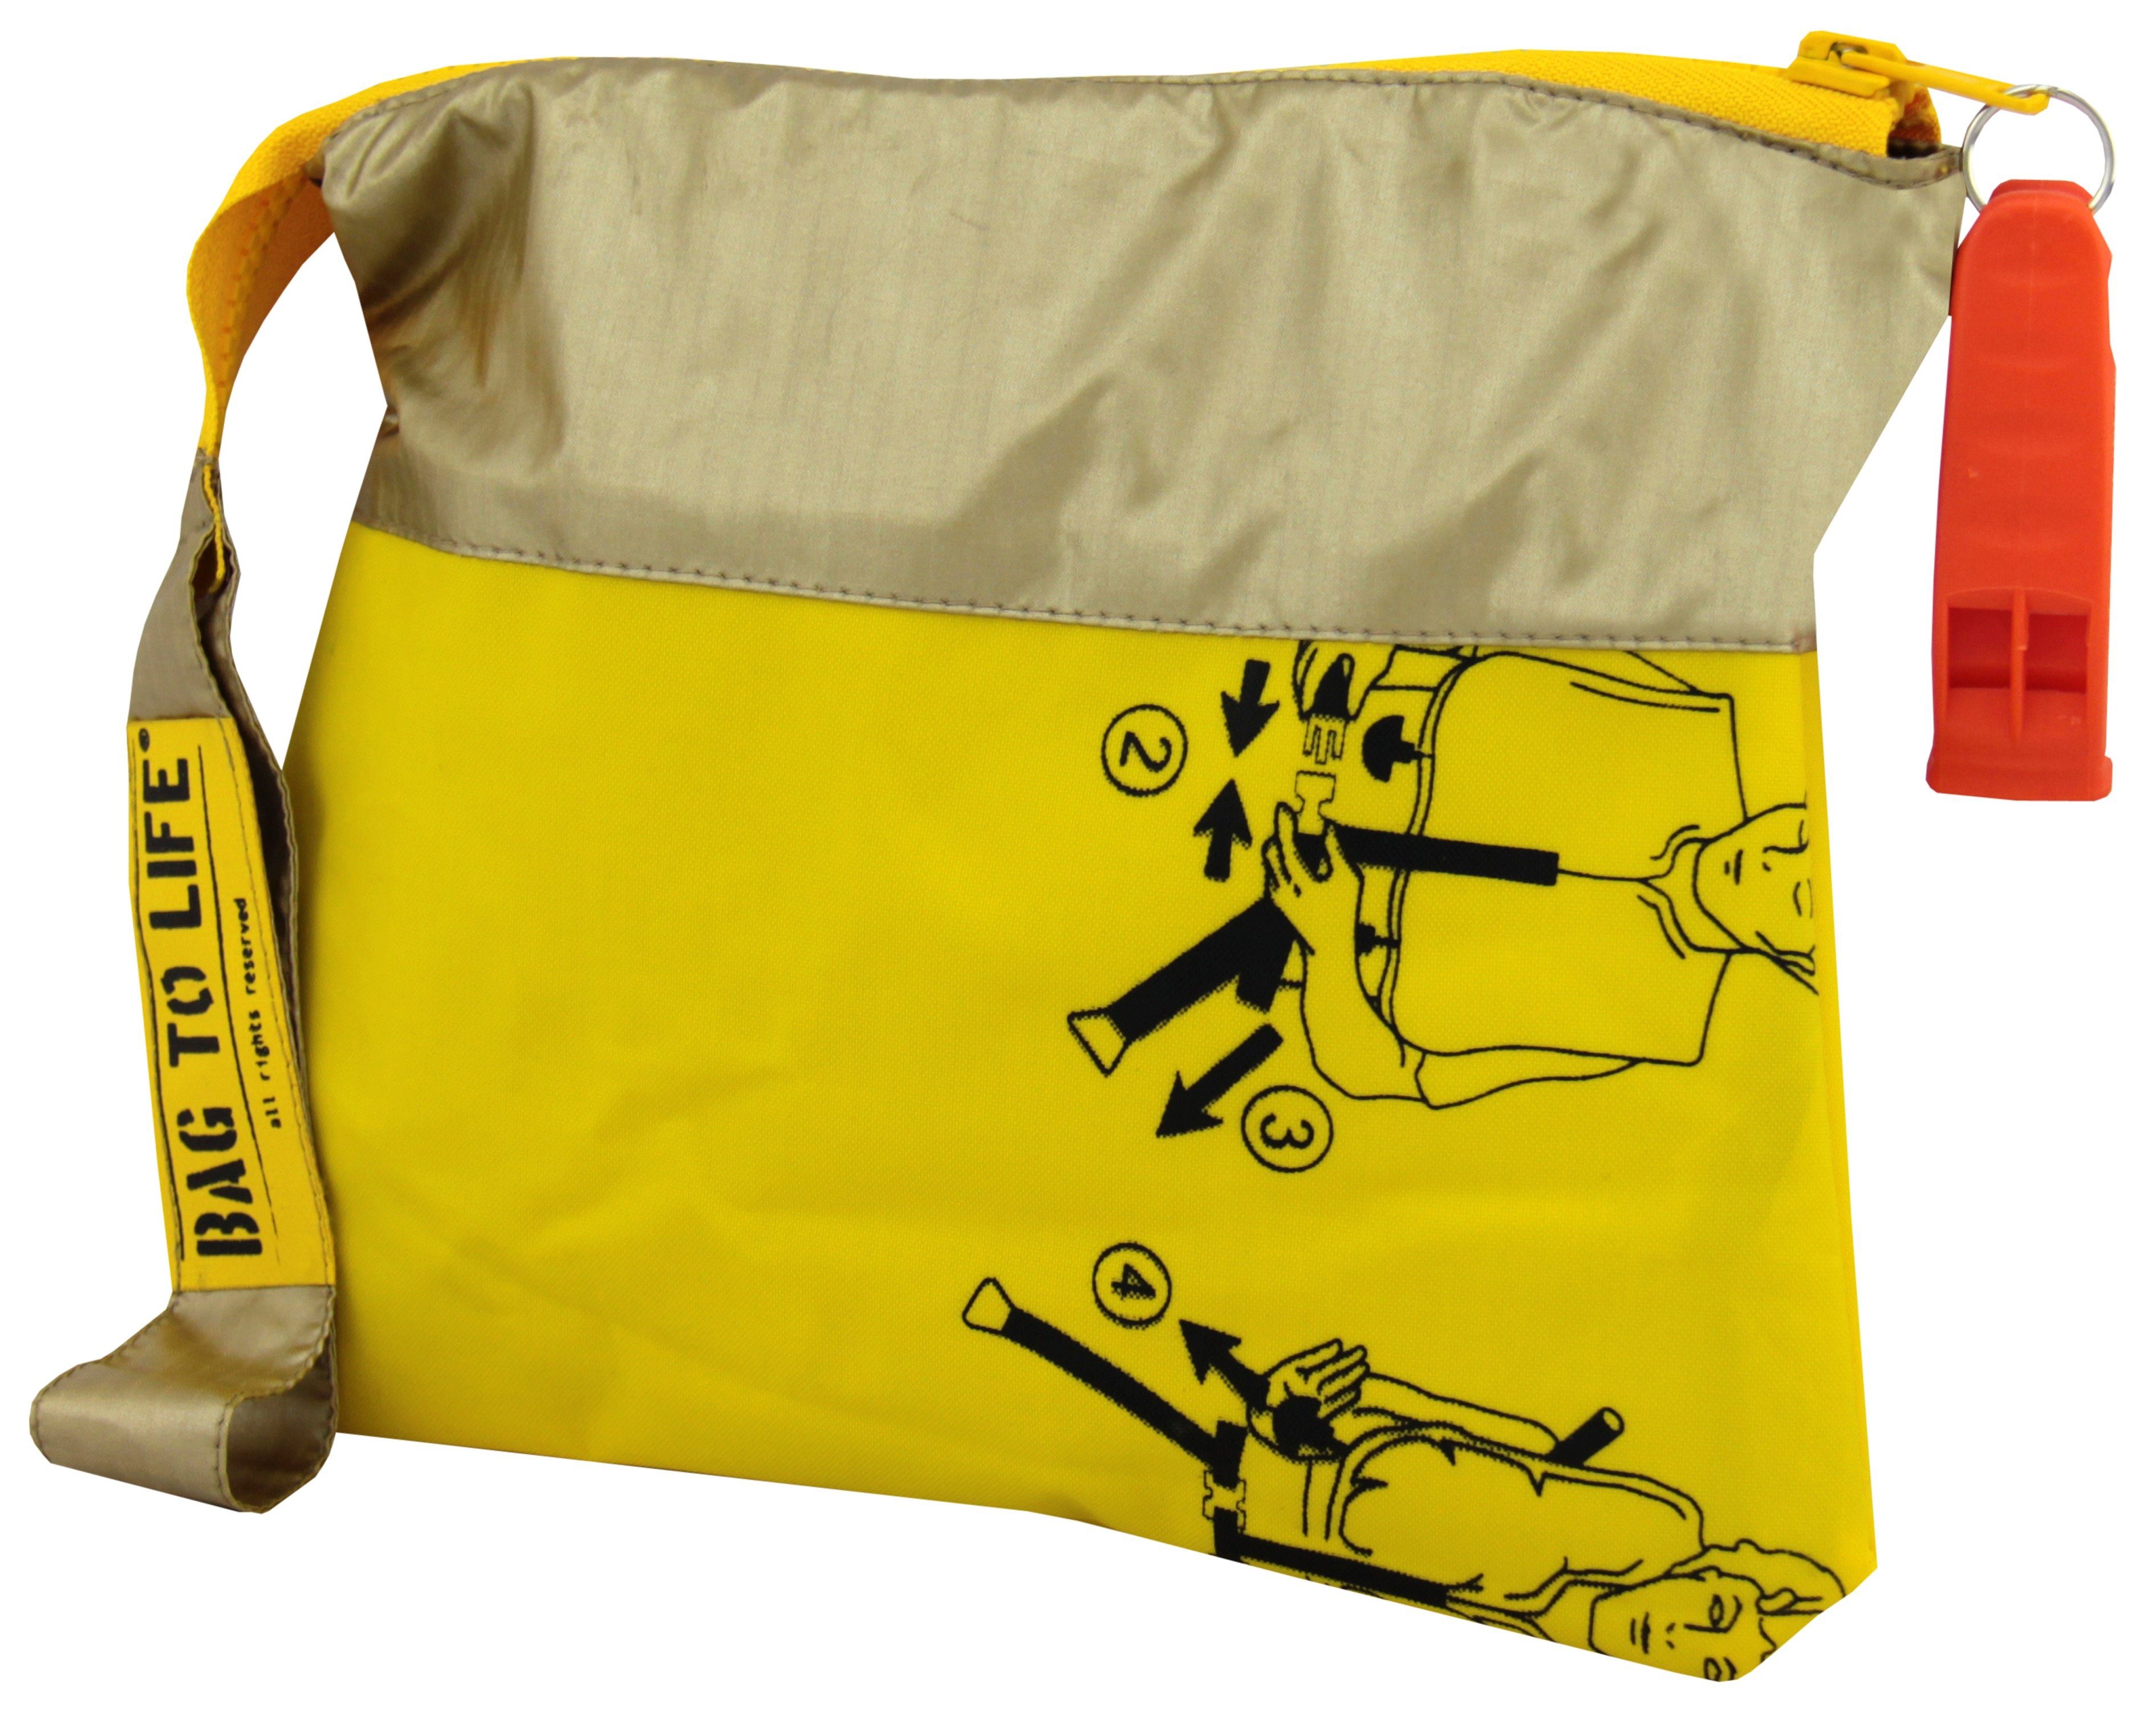 Bag to Life Kosmetiktasche Amenity Kit, aus recycelter Rettungsweste